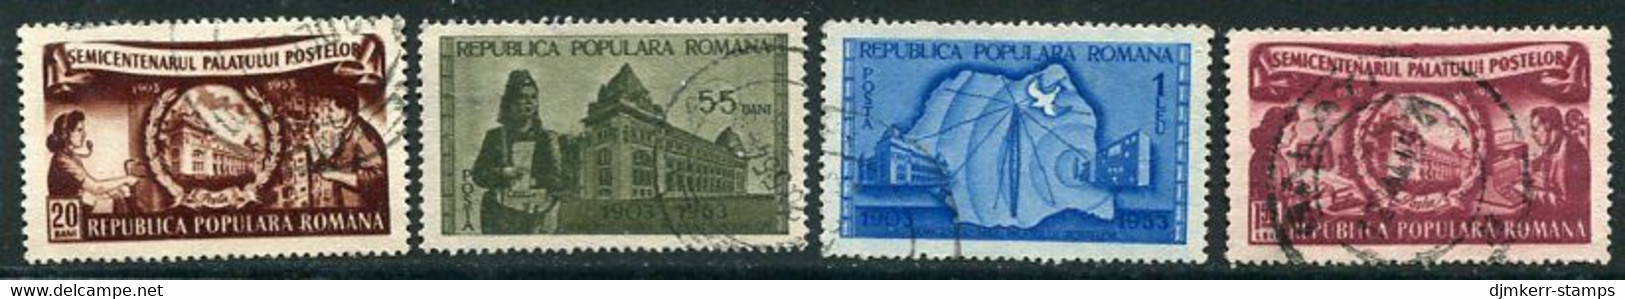 ROMANIA 1953 Post Office Building Used.  Michel 1445-48 - Usado